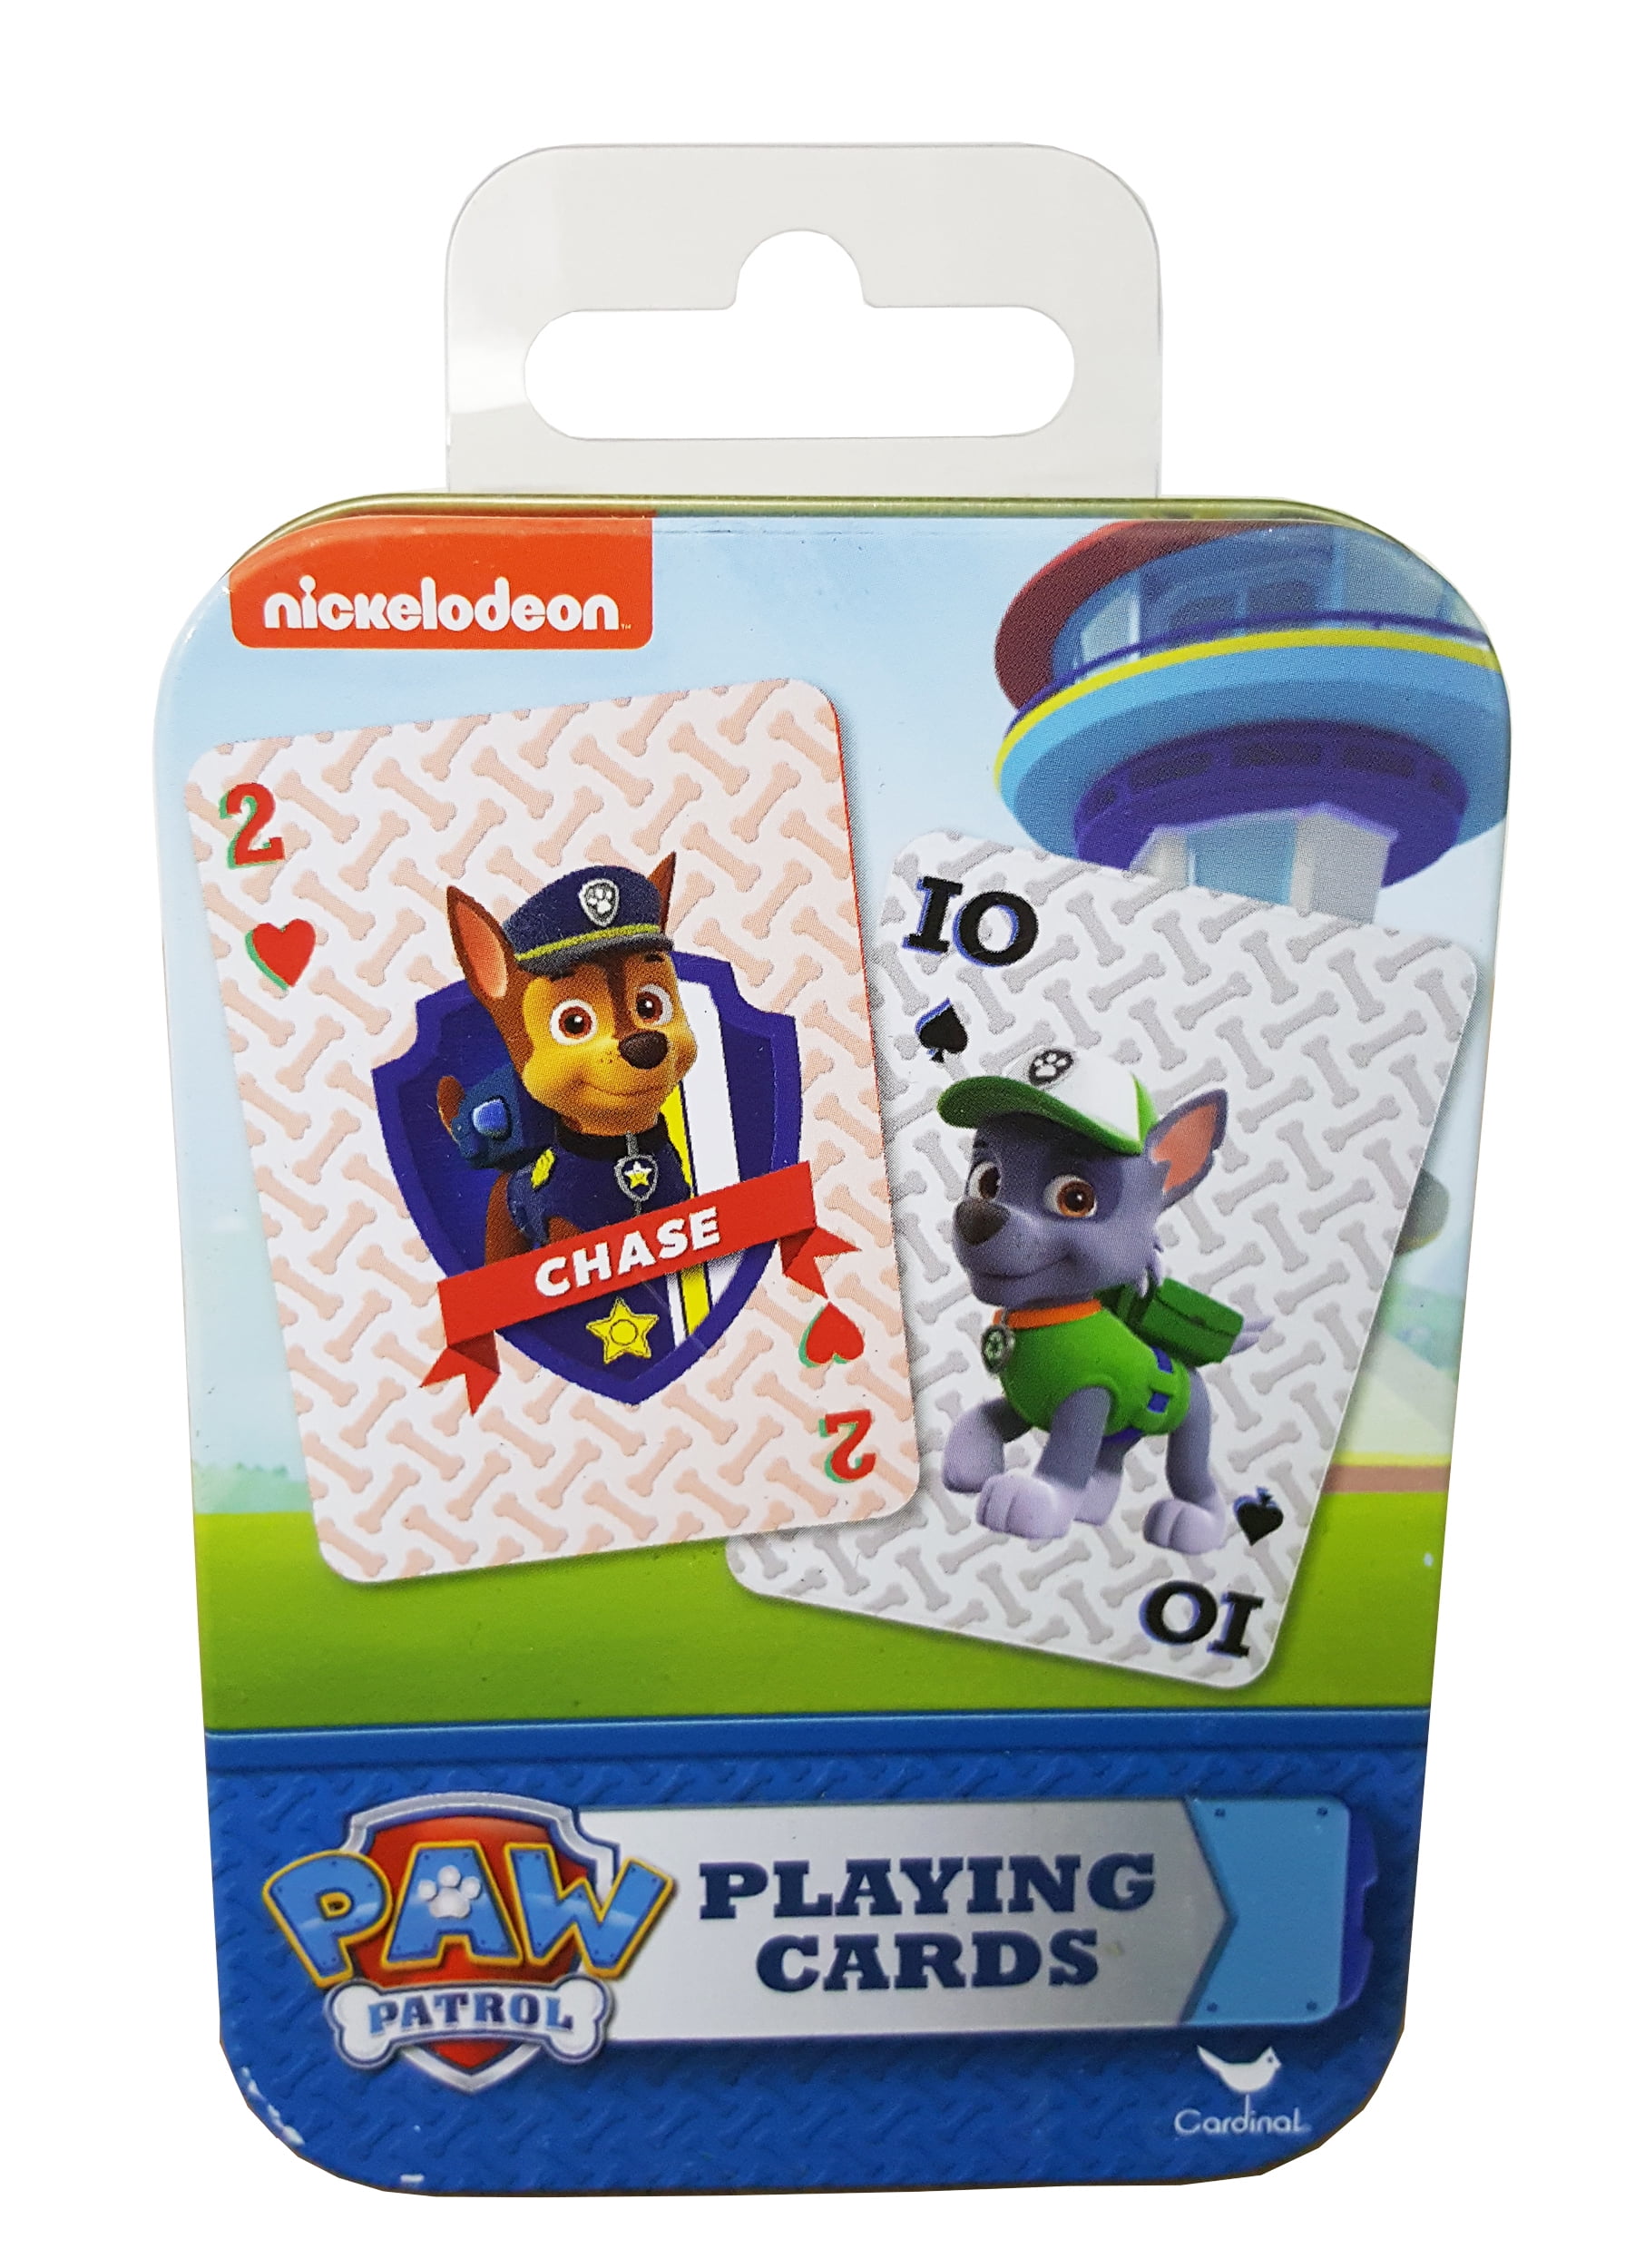 PAW Patrol Playing Cards in Mini Walmart.com